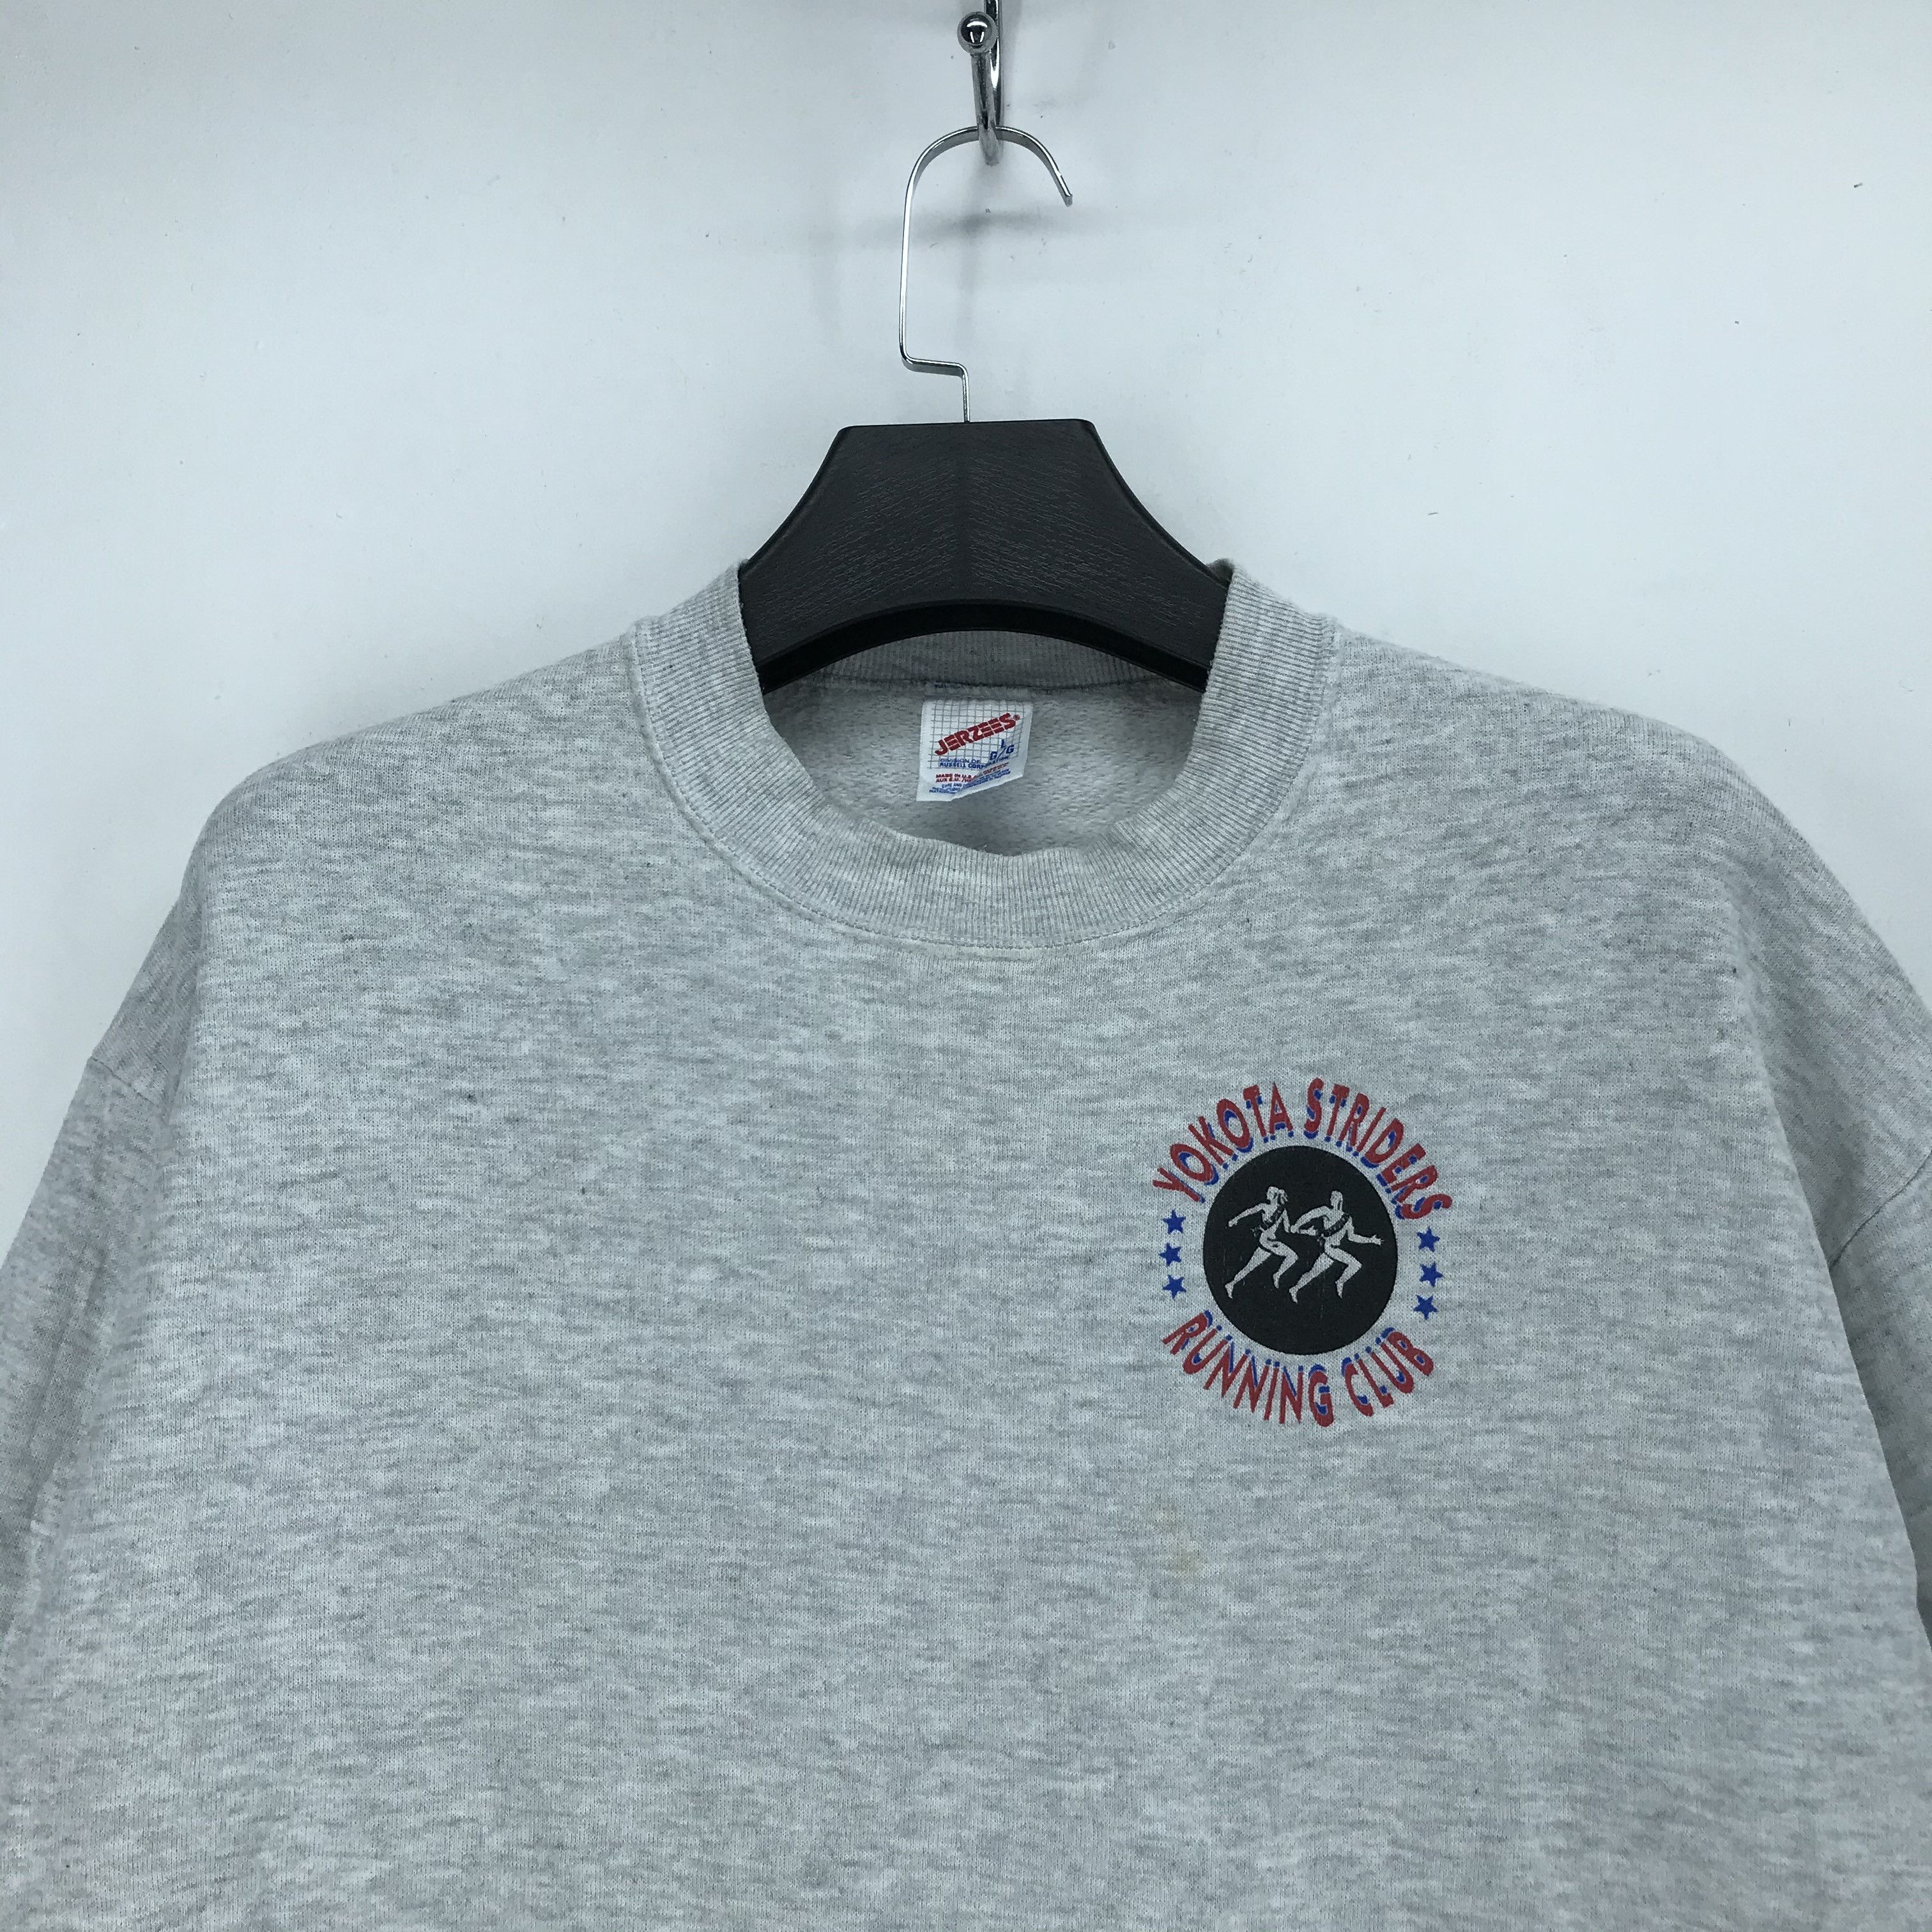 Vintage 96 Yokota Striders Running Club Sweatshirts #2169-84 - 4